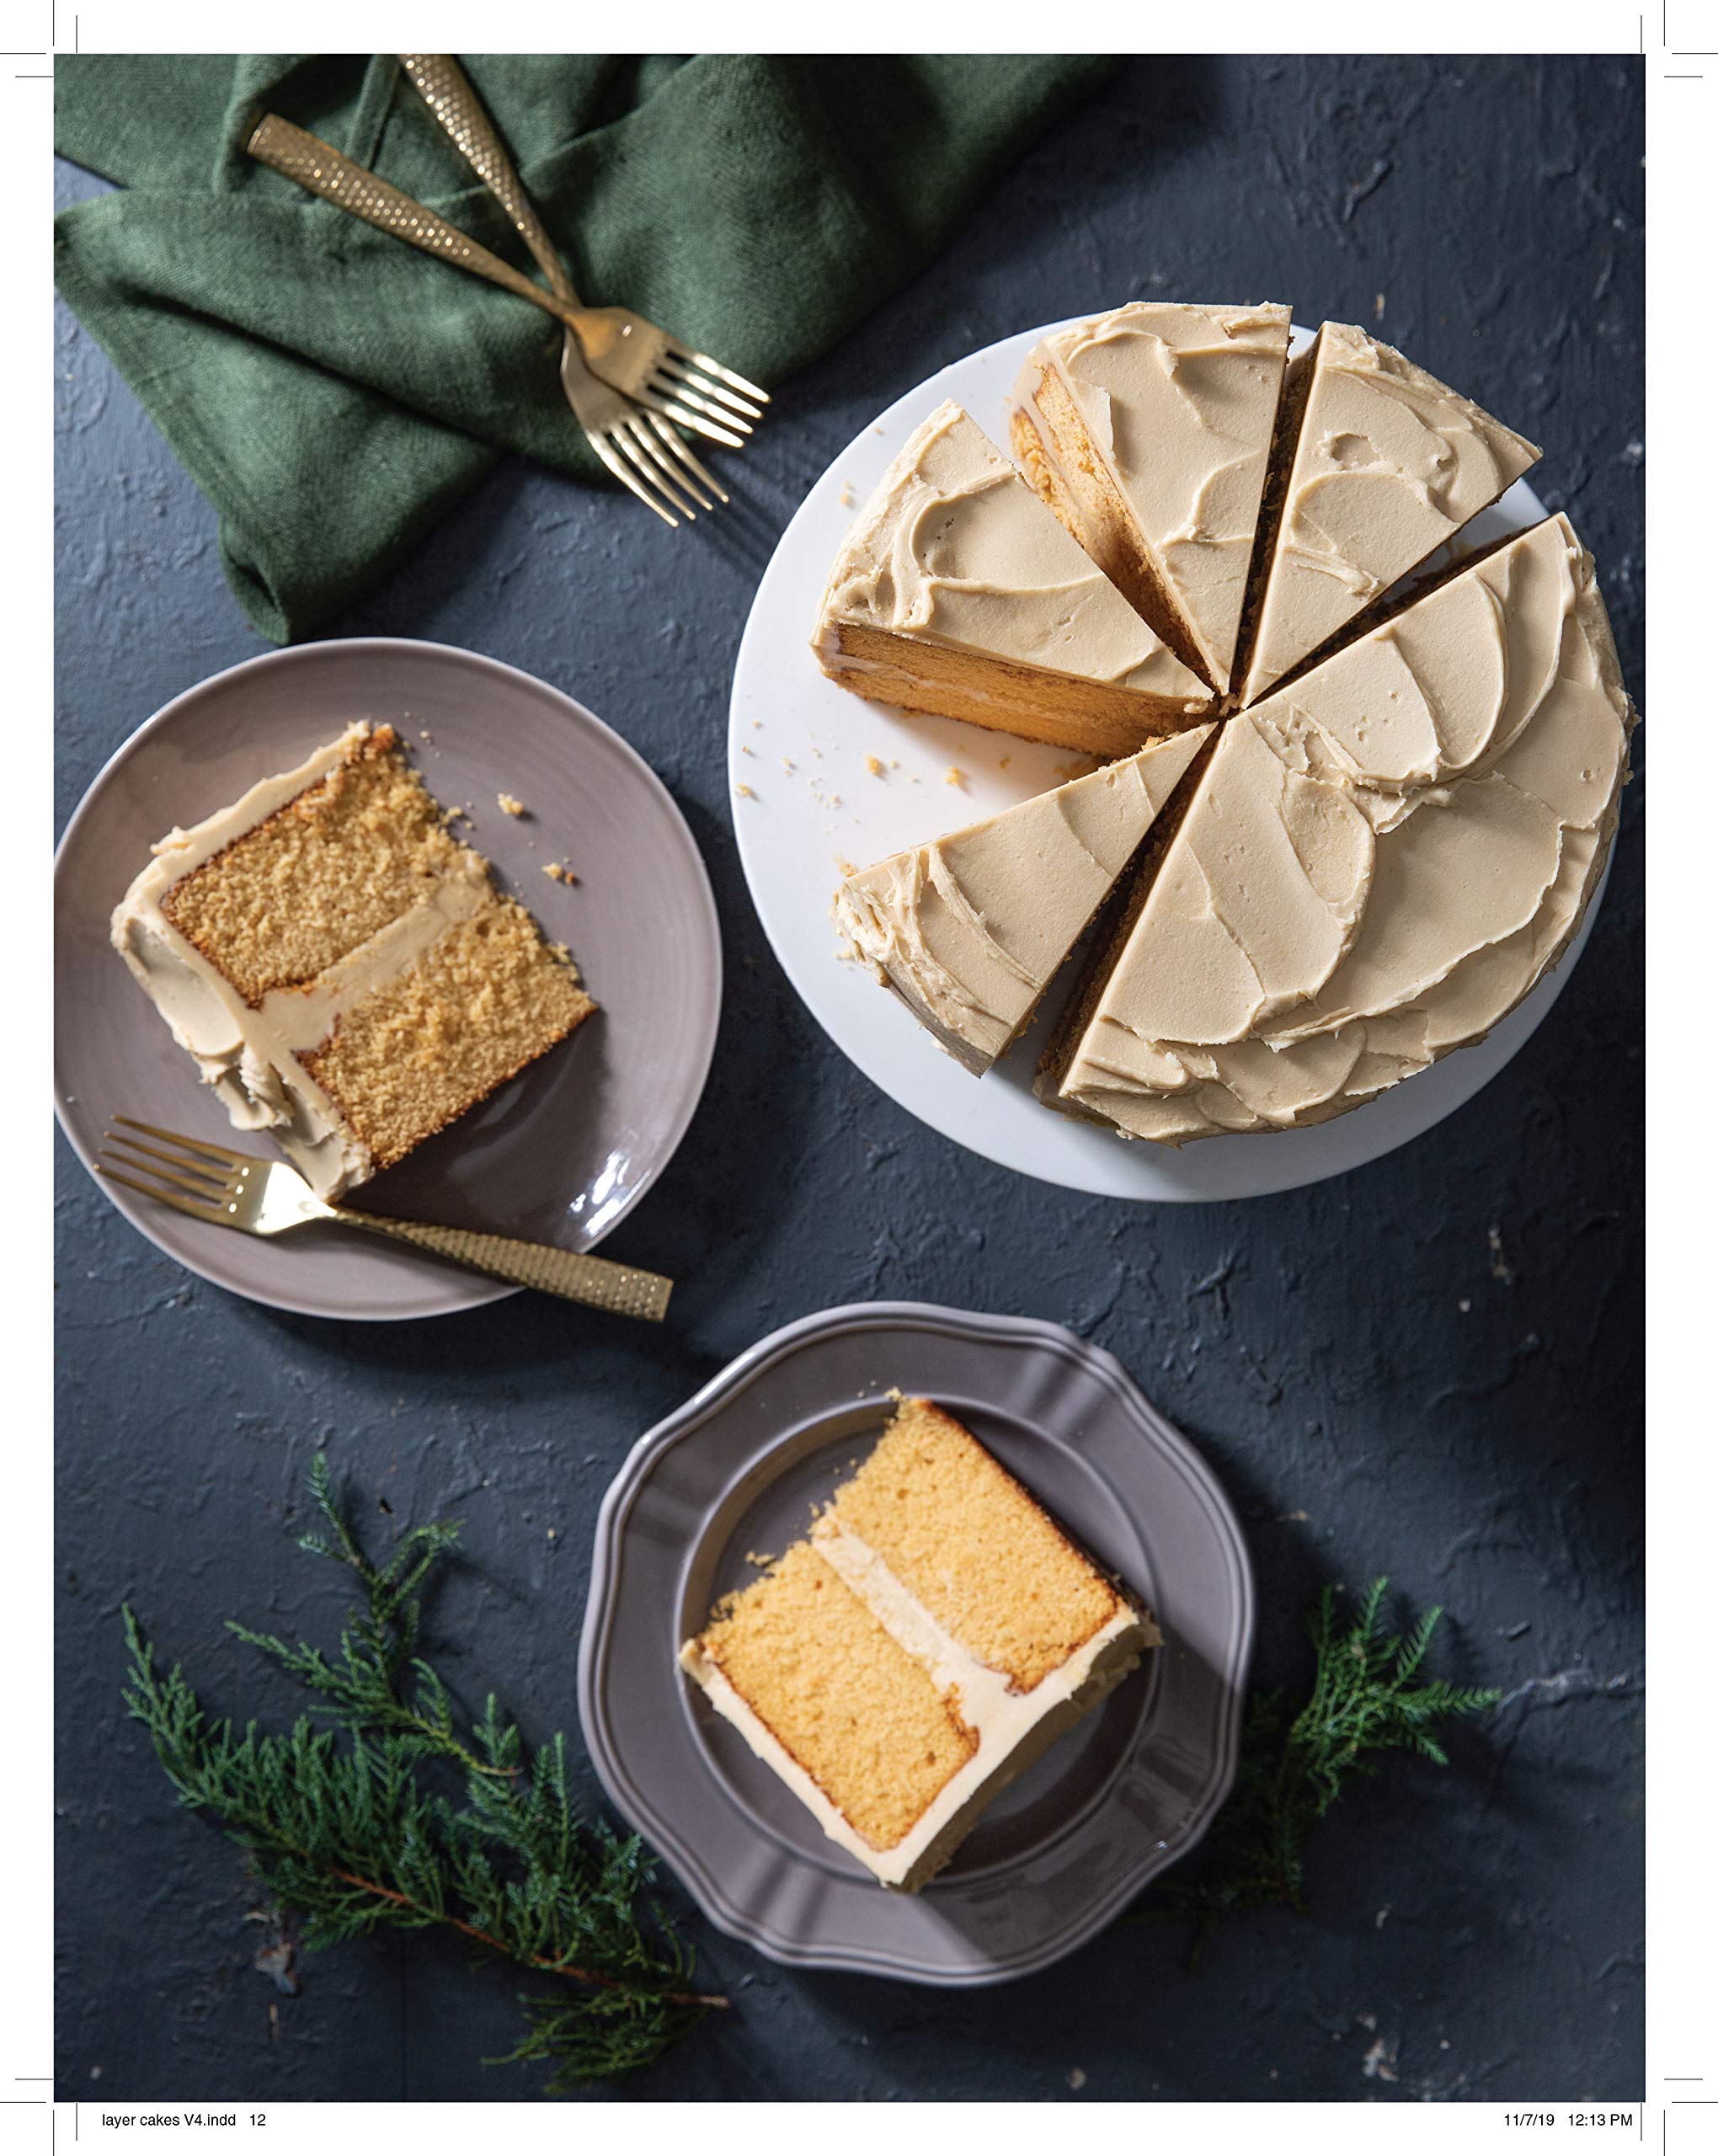 Bake from Scratch (Vol 4): Artisan Recipes for the Home Baker (Brian Hart Hoffman)